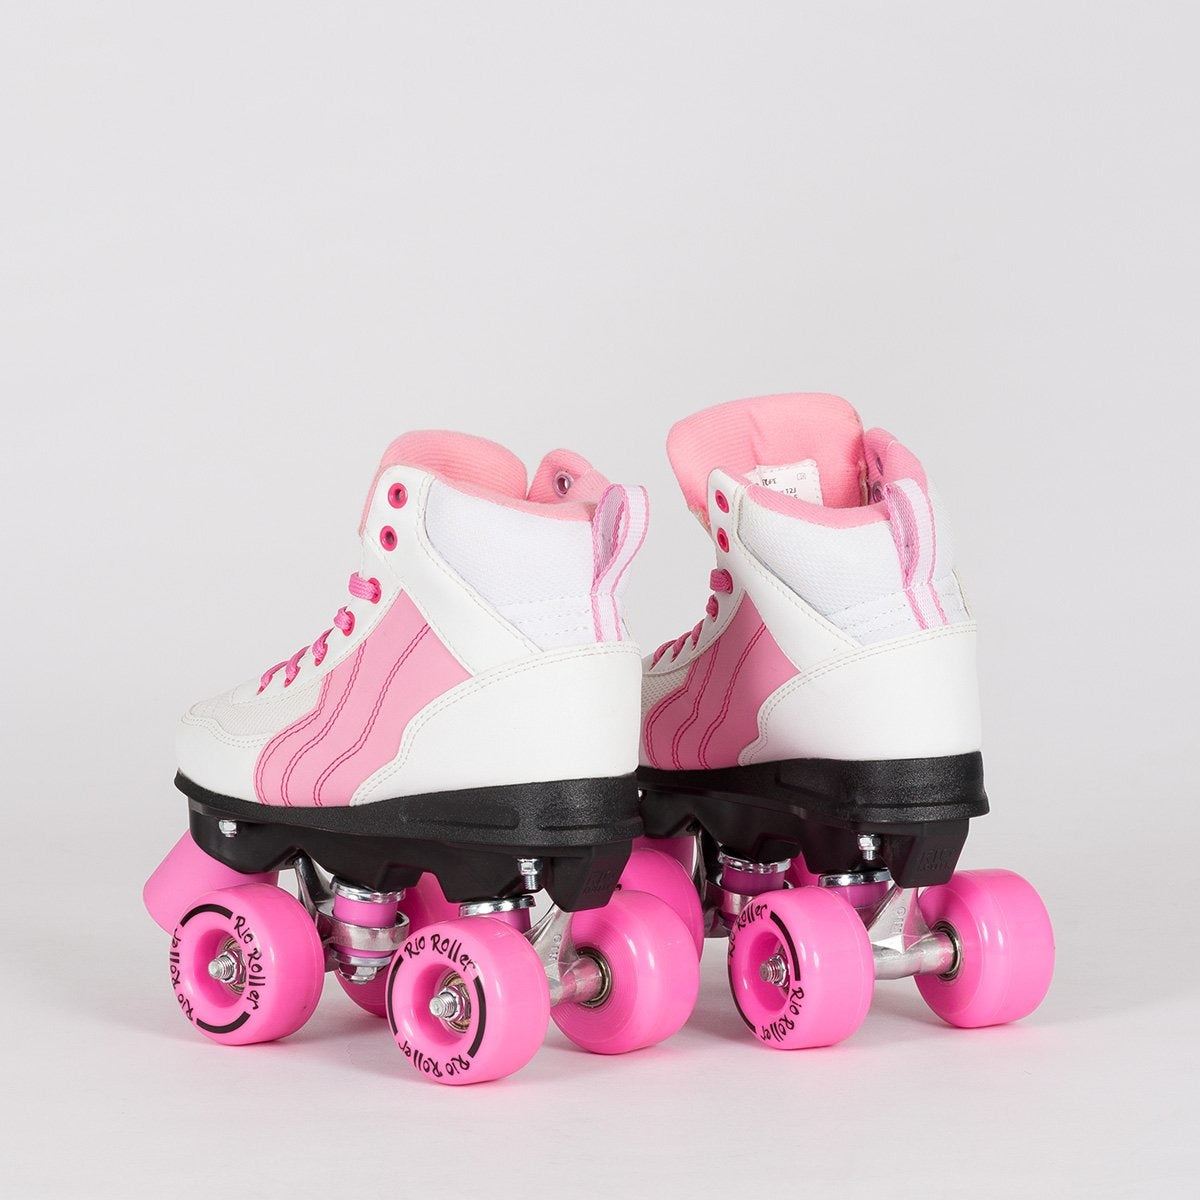 Rio Roller Classic Quads Pure White/Pink